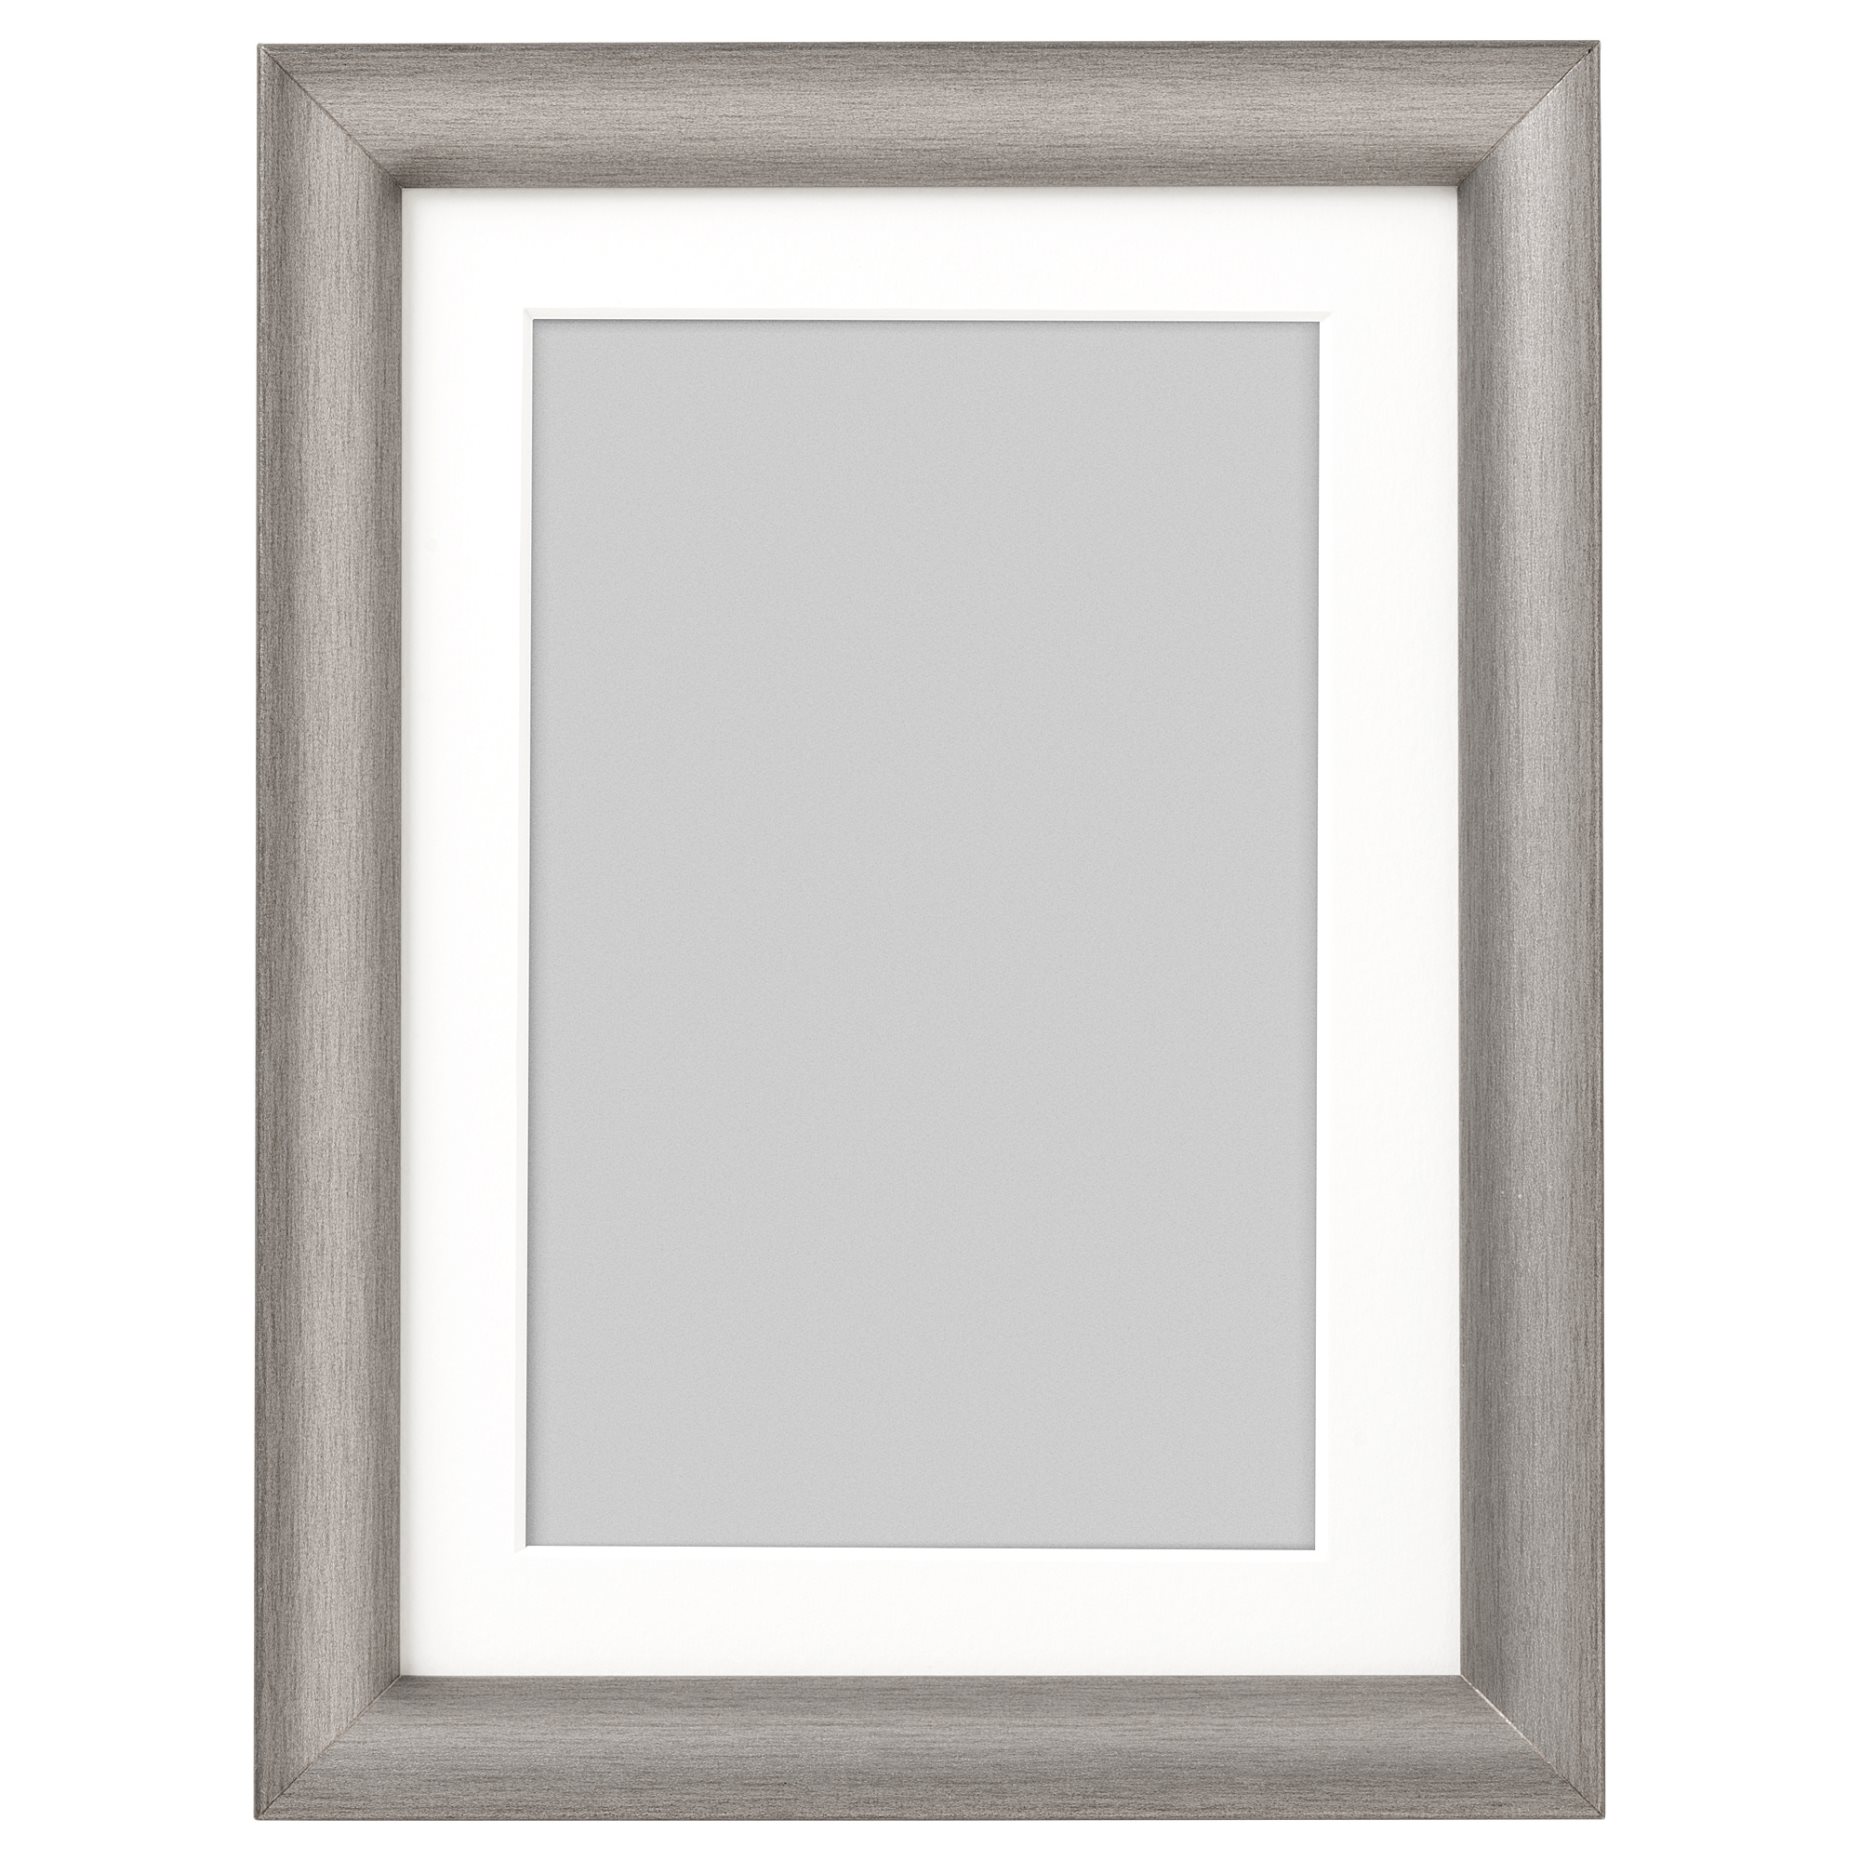 SILVERHÖJDEN, frame, 13x18 cm, 002.920.94